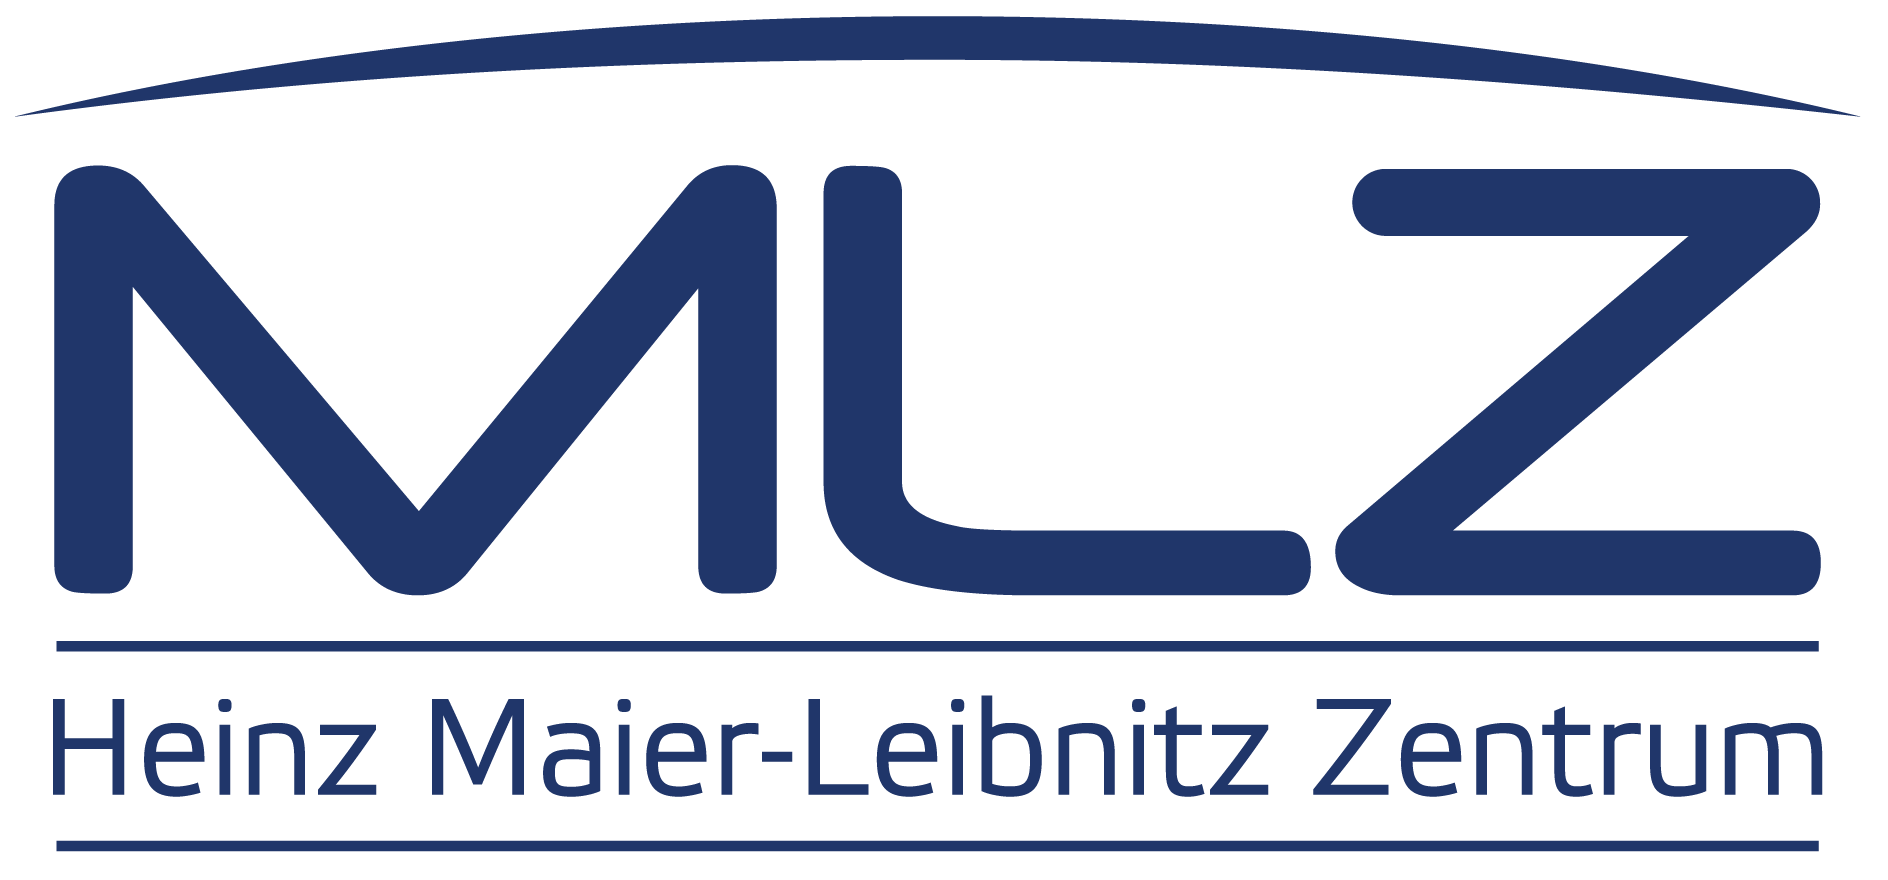 MLZ - Heinz Maier-Leibnitz Zentrum - Garching